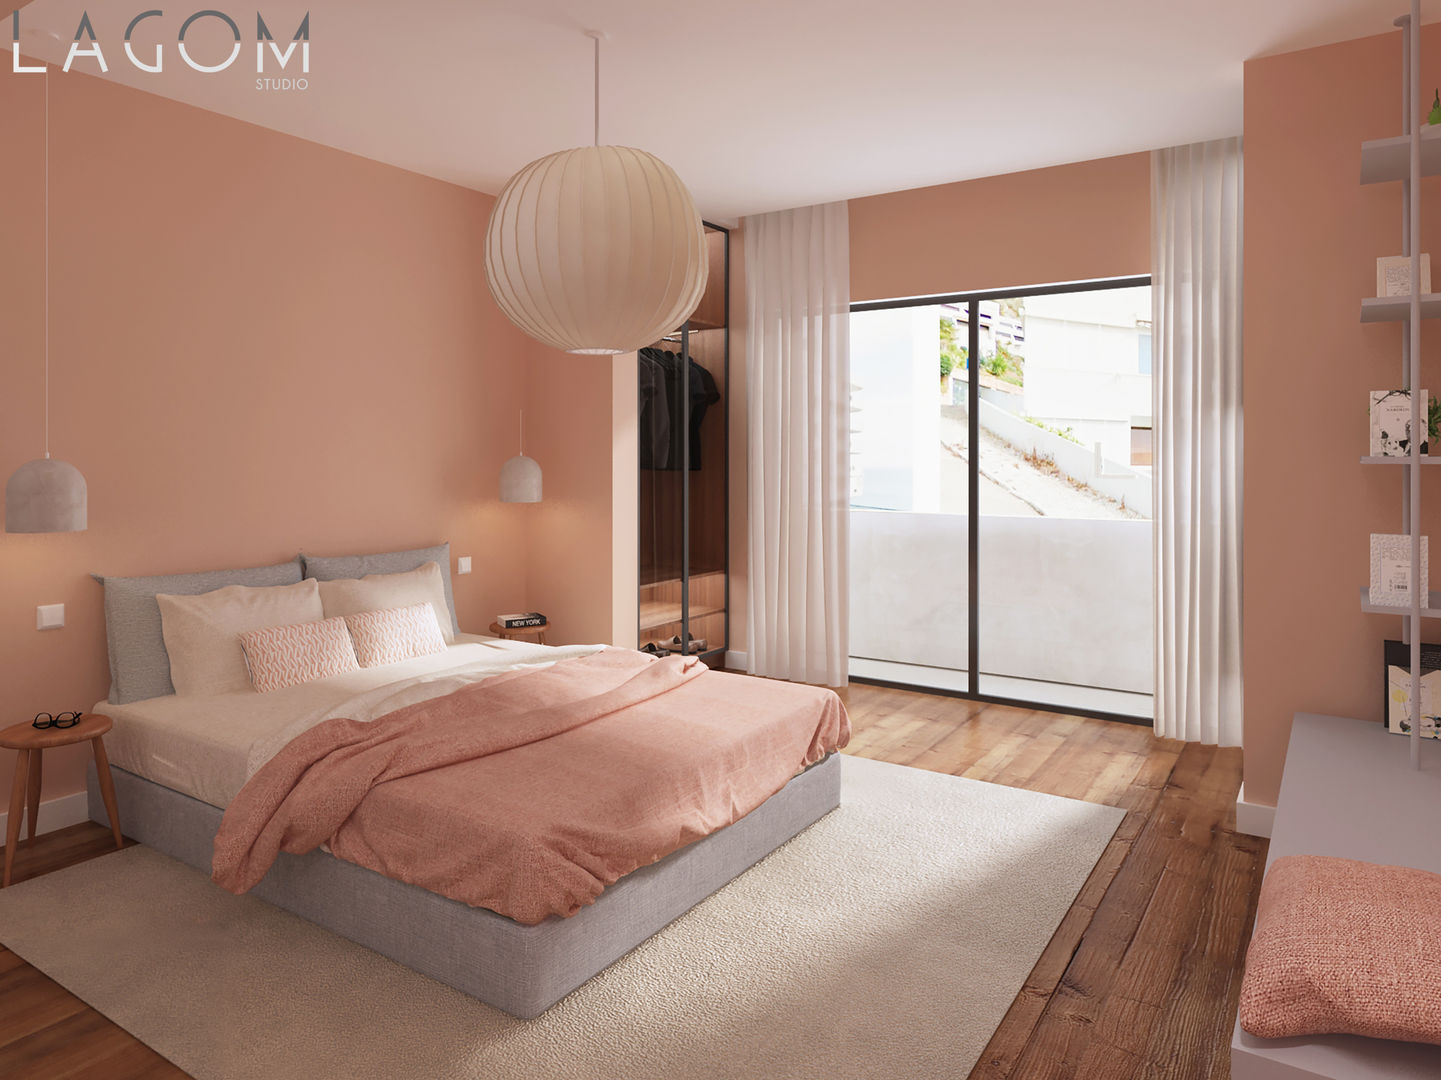 Moradia em Sesimbra, Lagom studio Lagom studio Scandinavian style bedroom